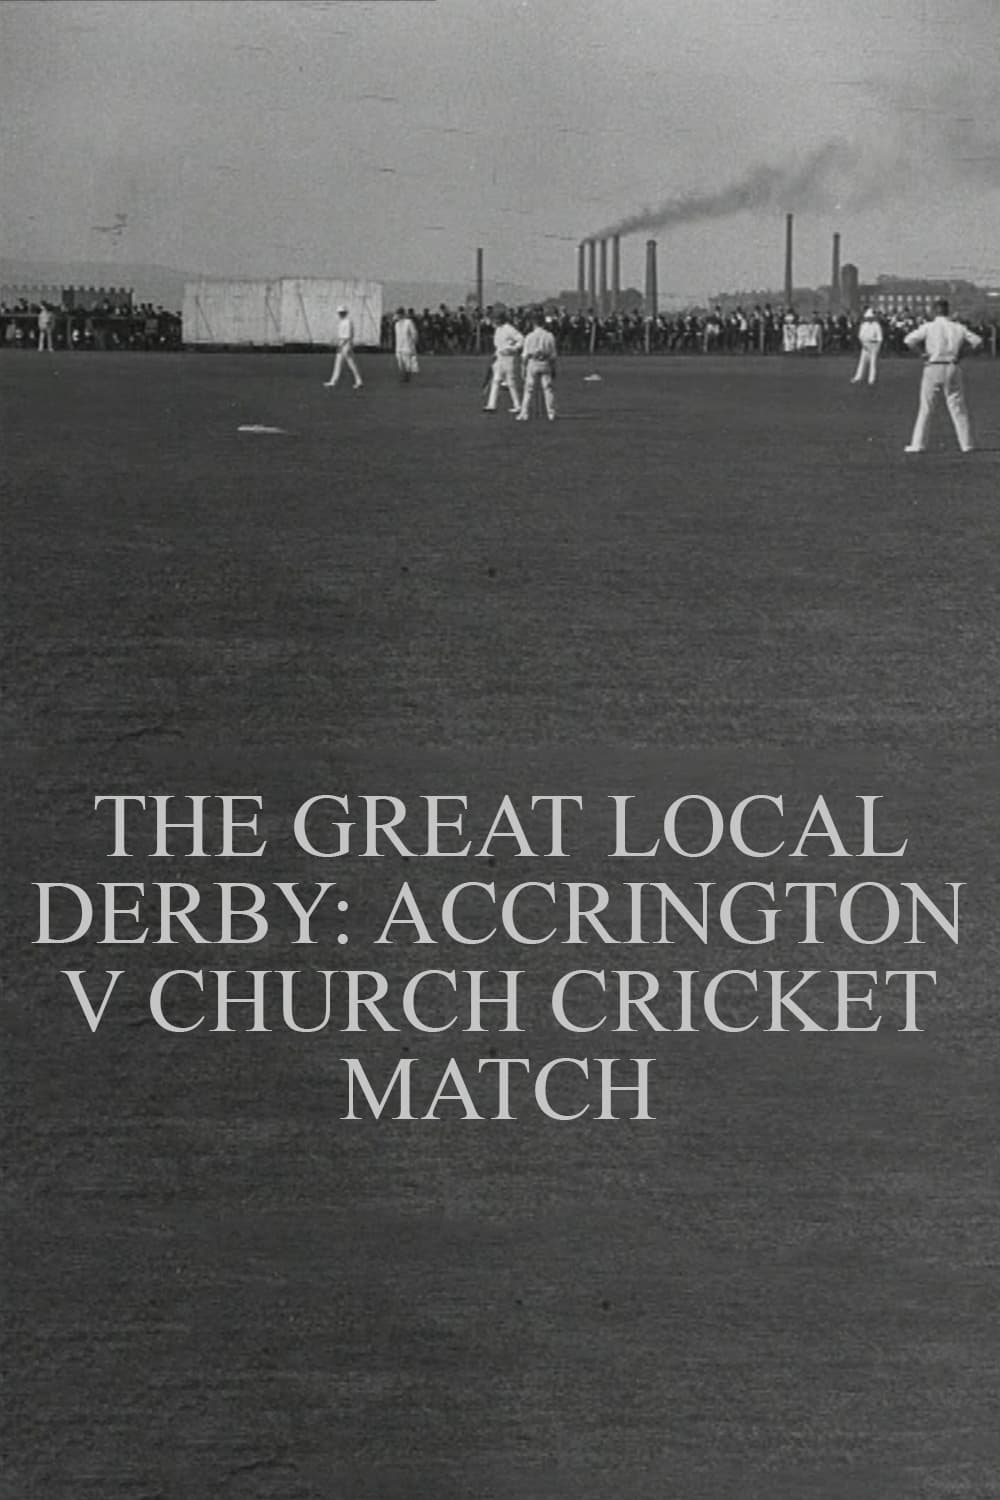 The Great Local Derby: Accrington v Church Cricket Match